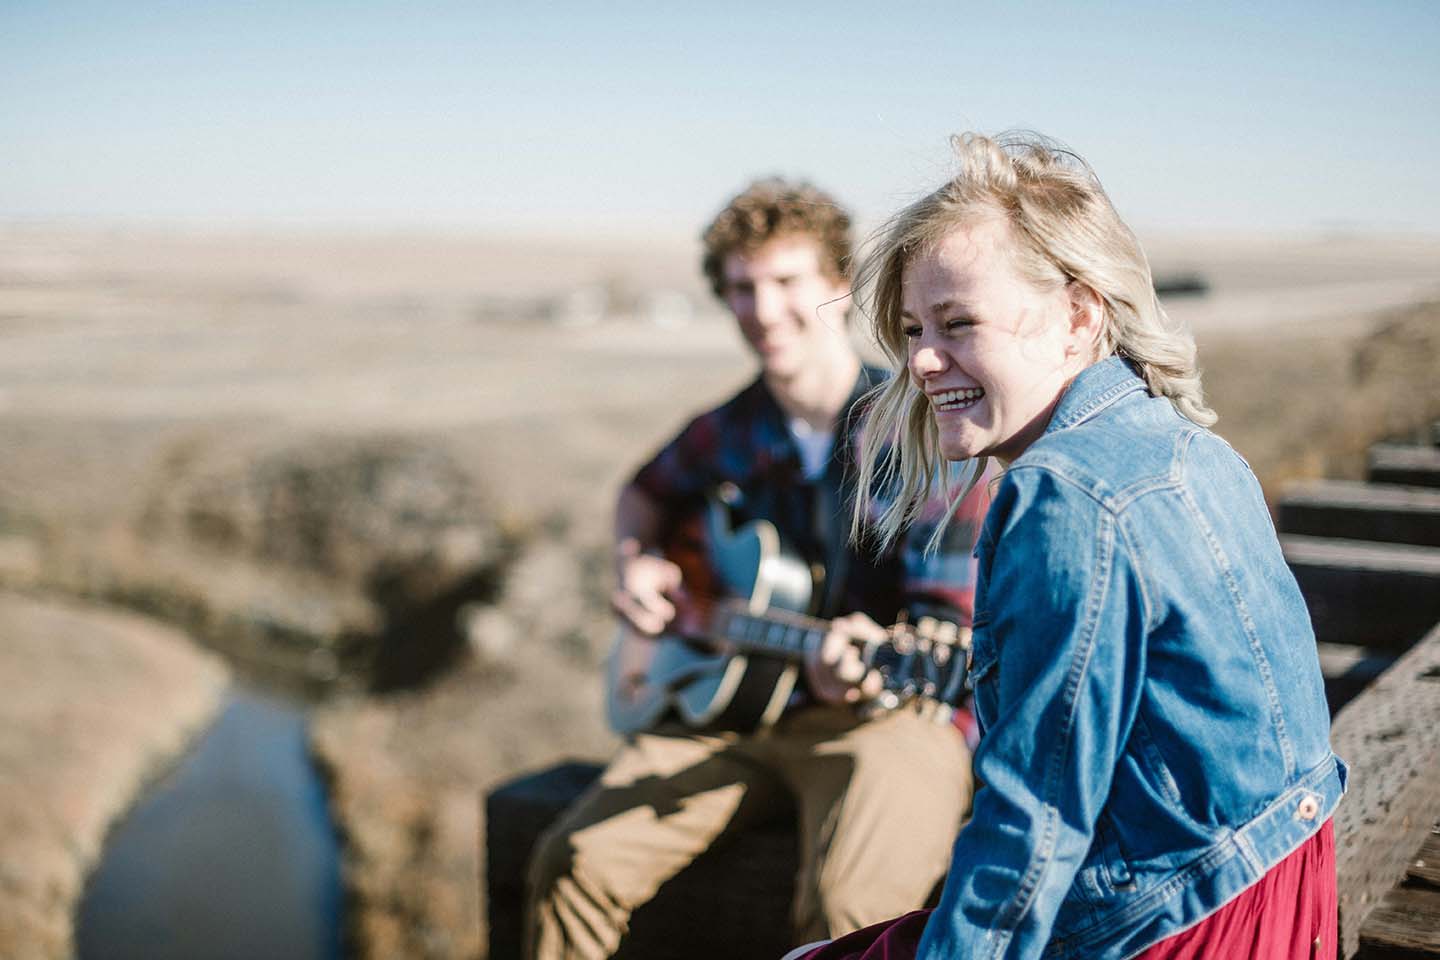 man plays guitar while woman smiles